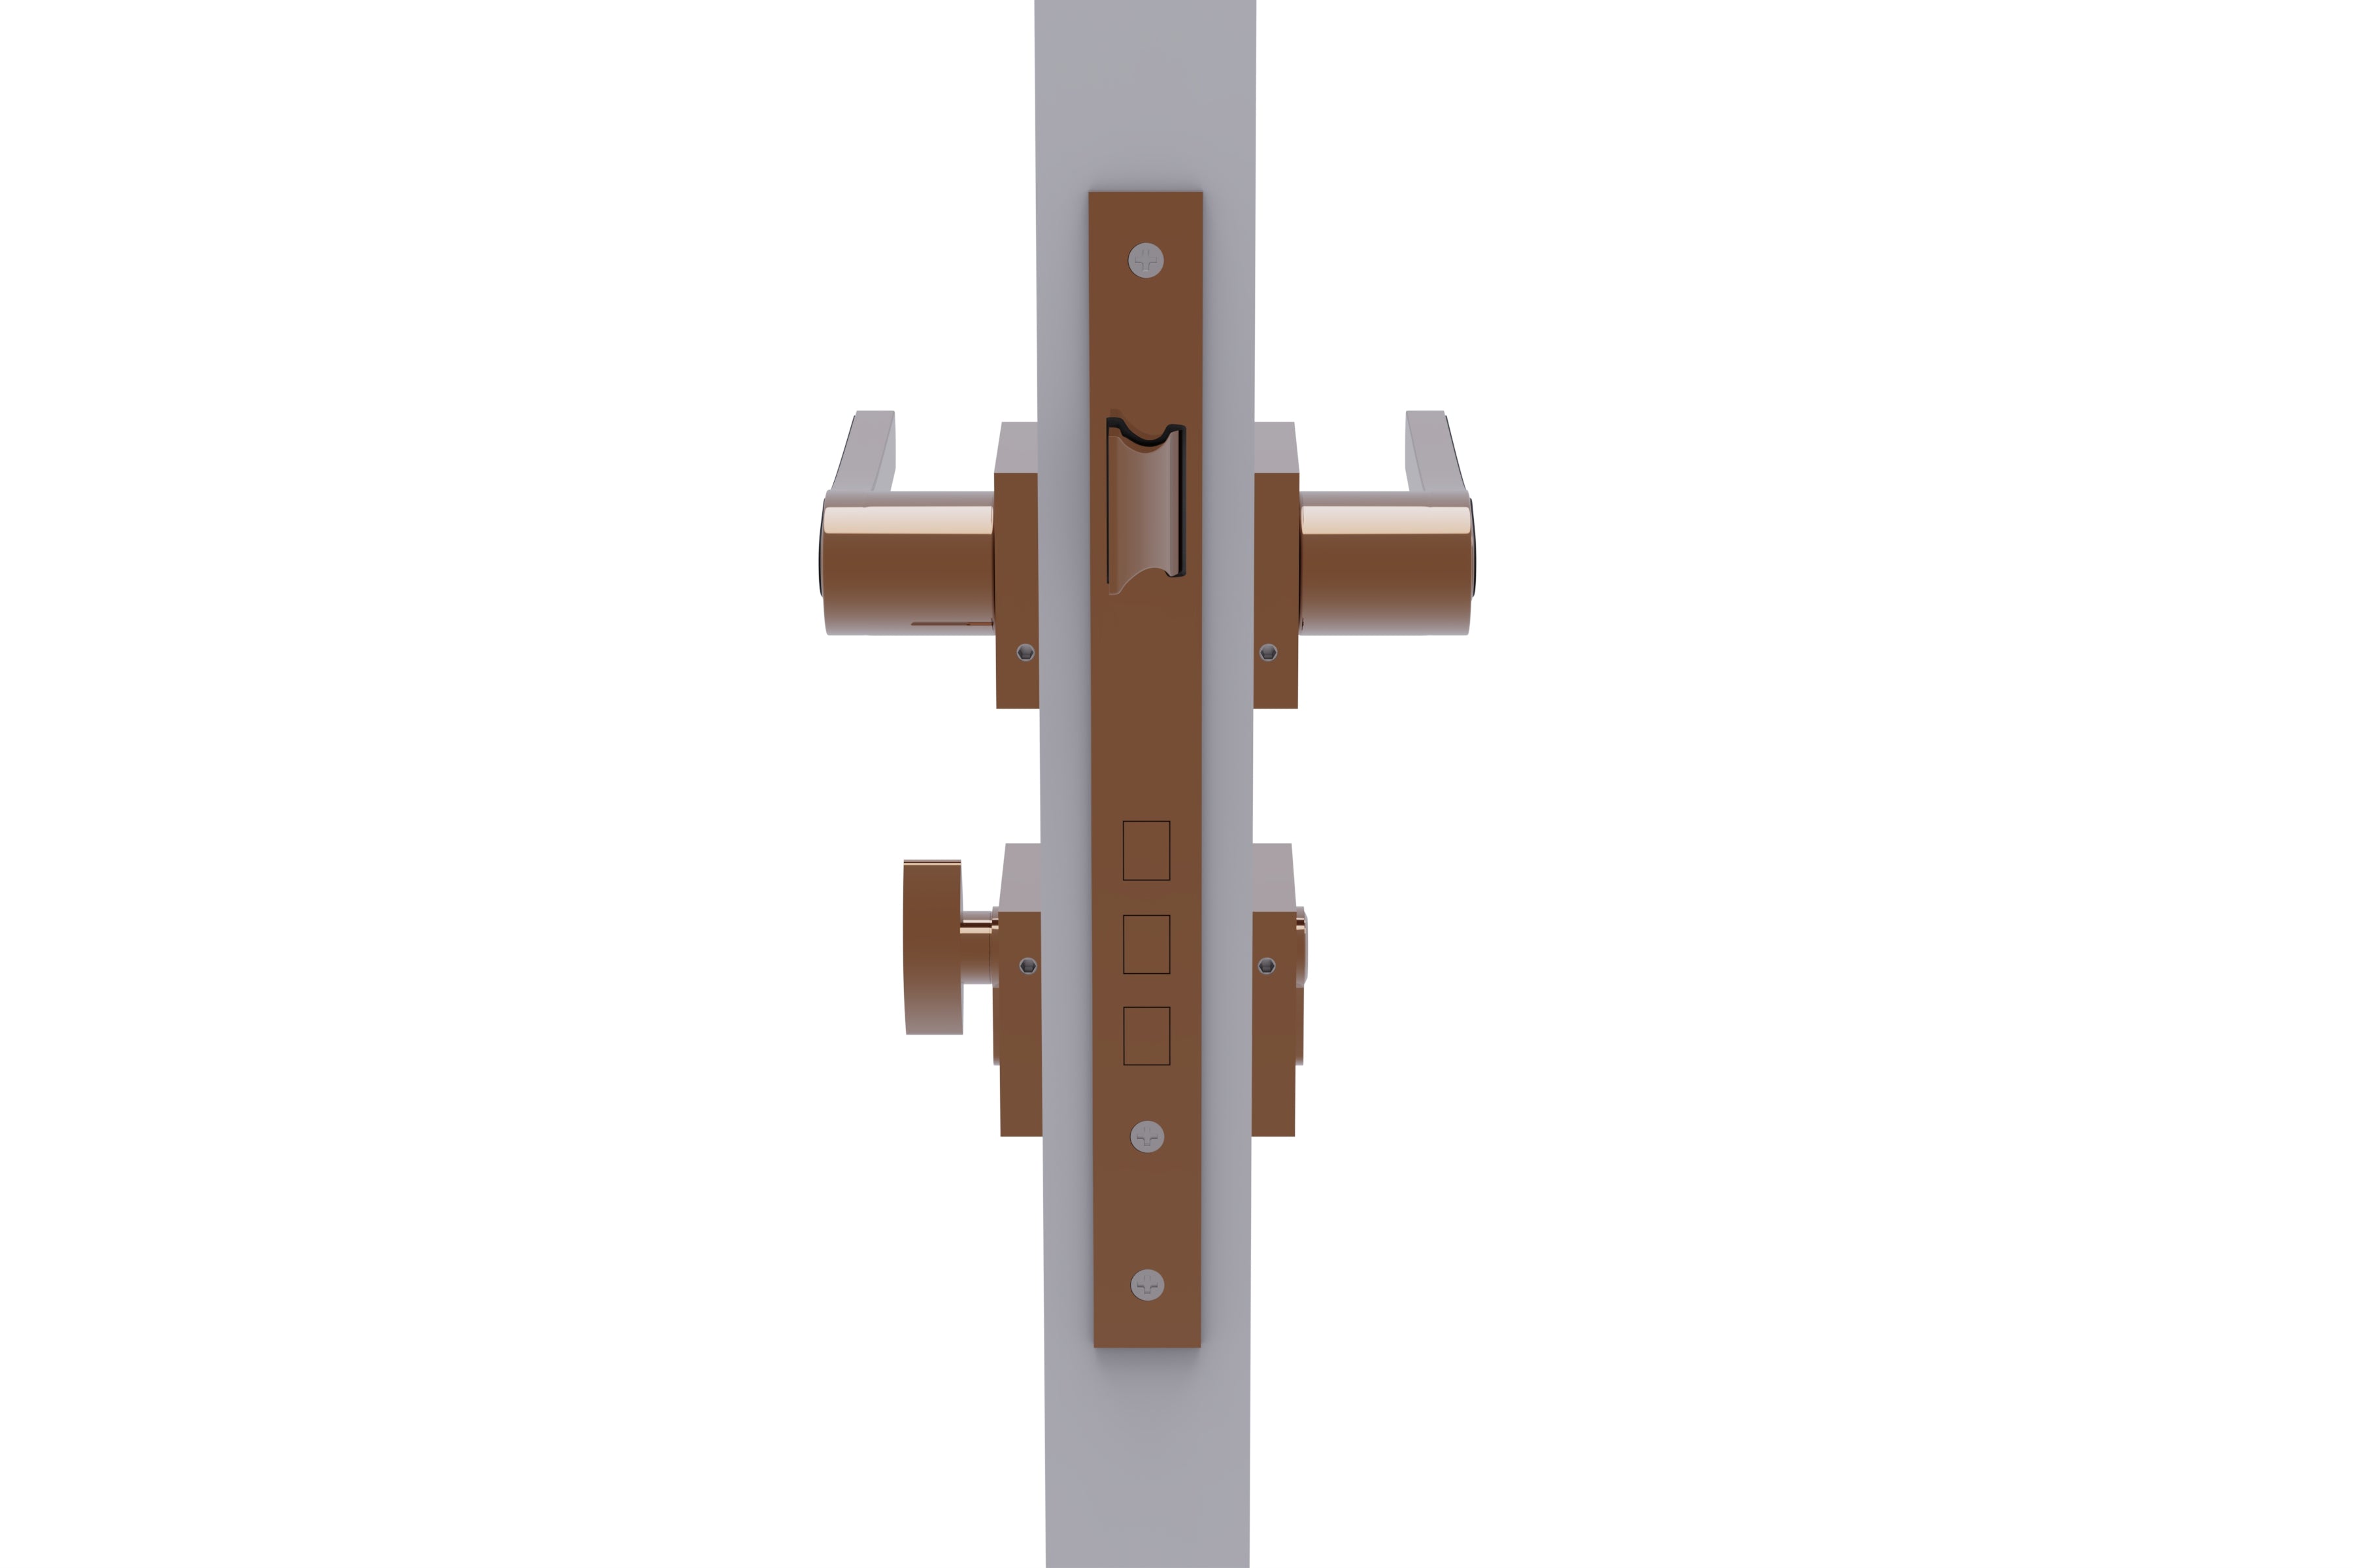 Mortise Door Handles | Main Door Lock Handles Set with 3 Keys for Safety of Home | Kitchen, Bedroom, Bathroom-by GLOXY®